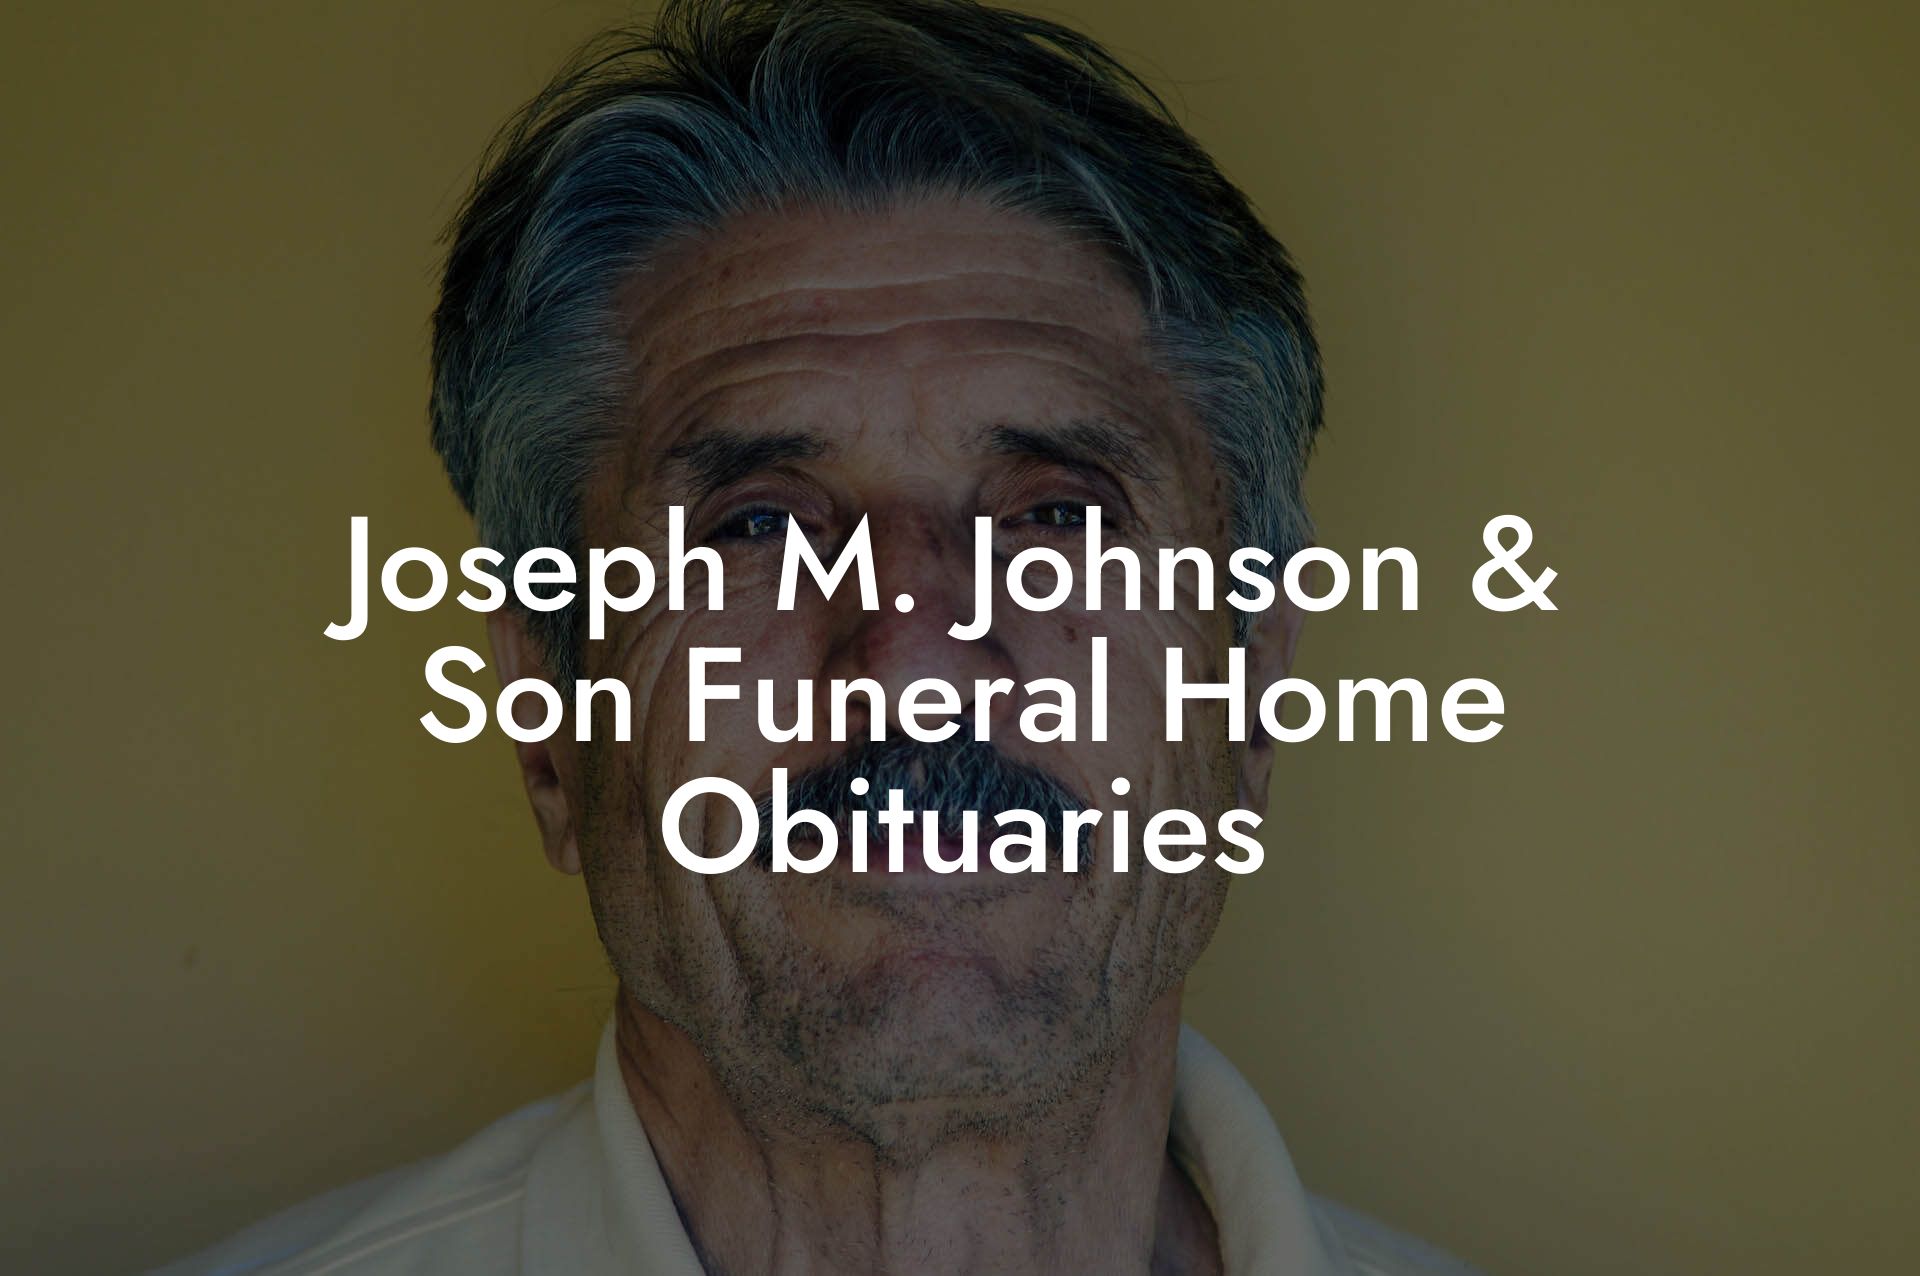 Joseph M. Johnson & Son Funeral Home Obituaries